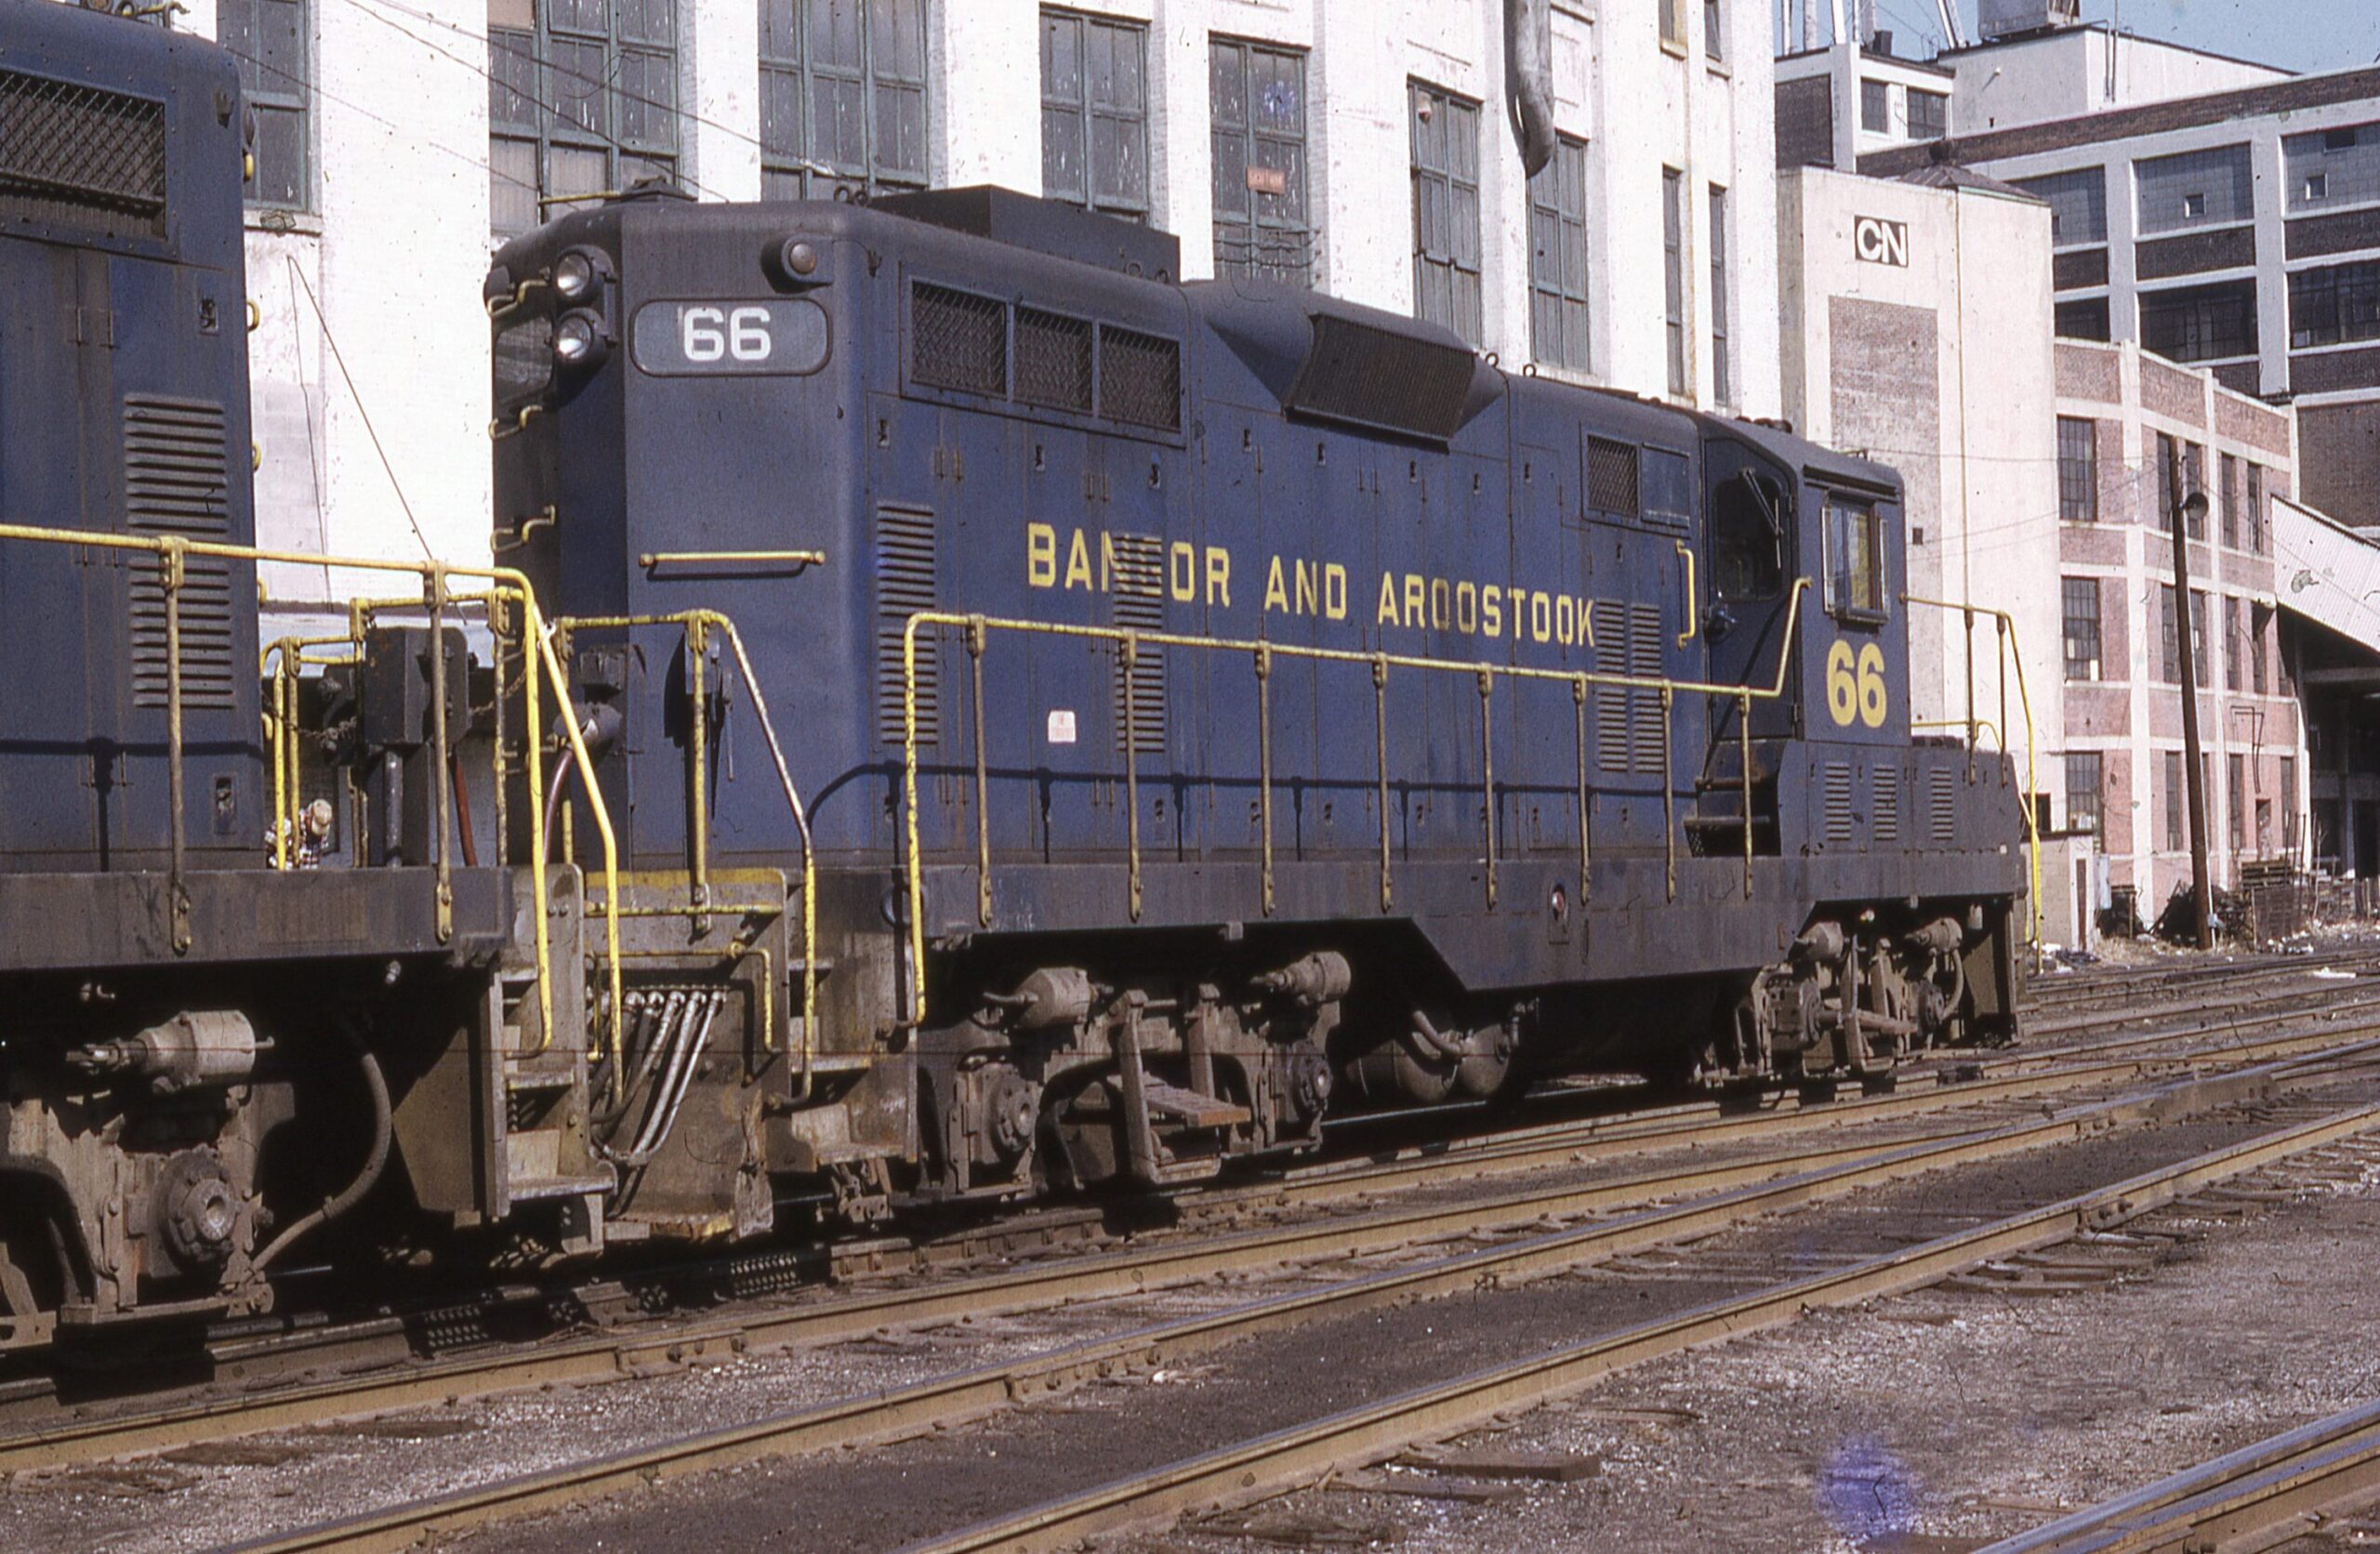 Bangor and Aroostook Railroad | Long Island City, New York | EMD GP7 66 diesel-electric locomotive  | February 10, 1975 | William Rosenberg photo